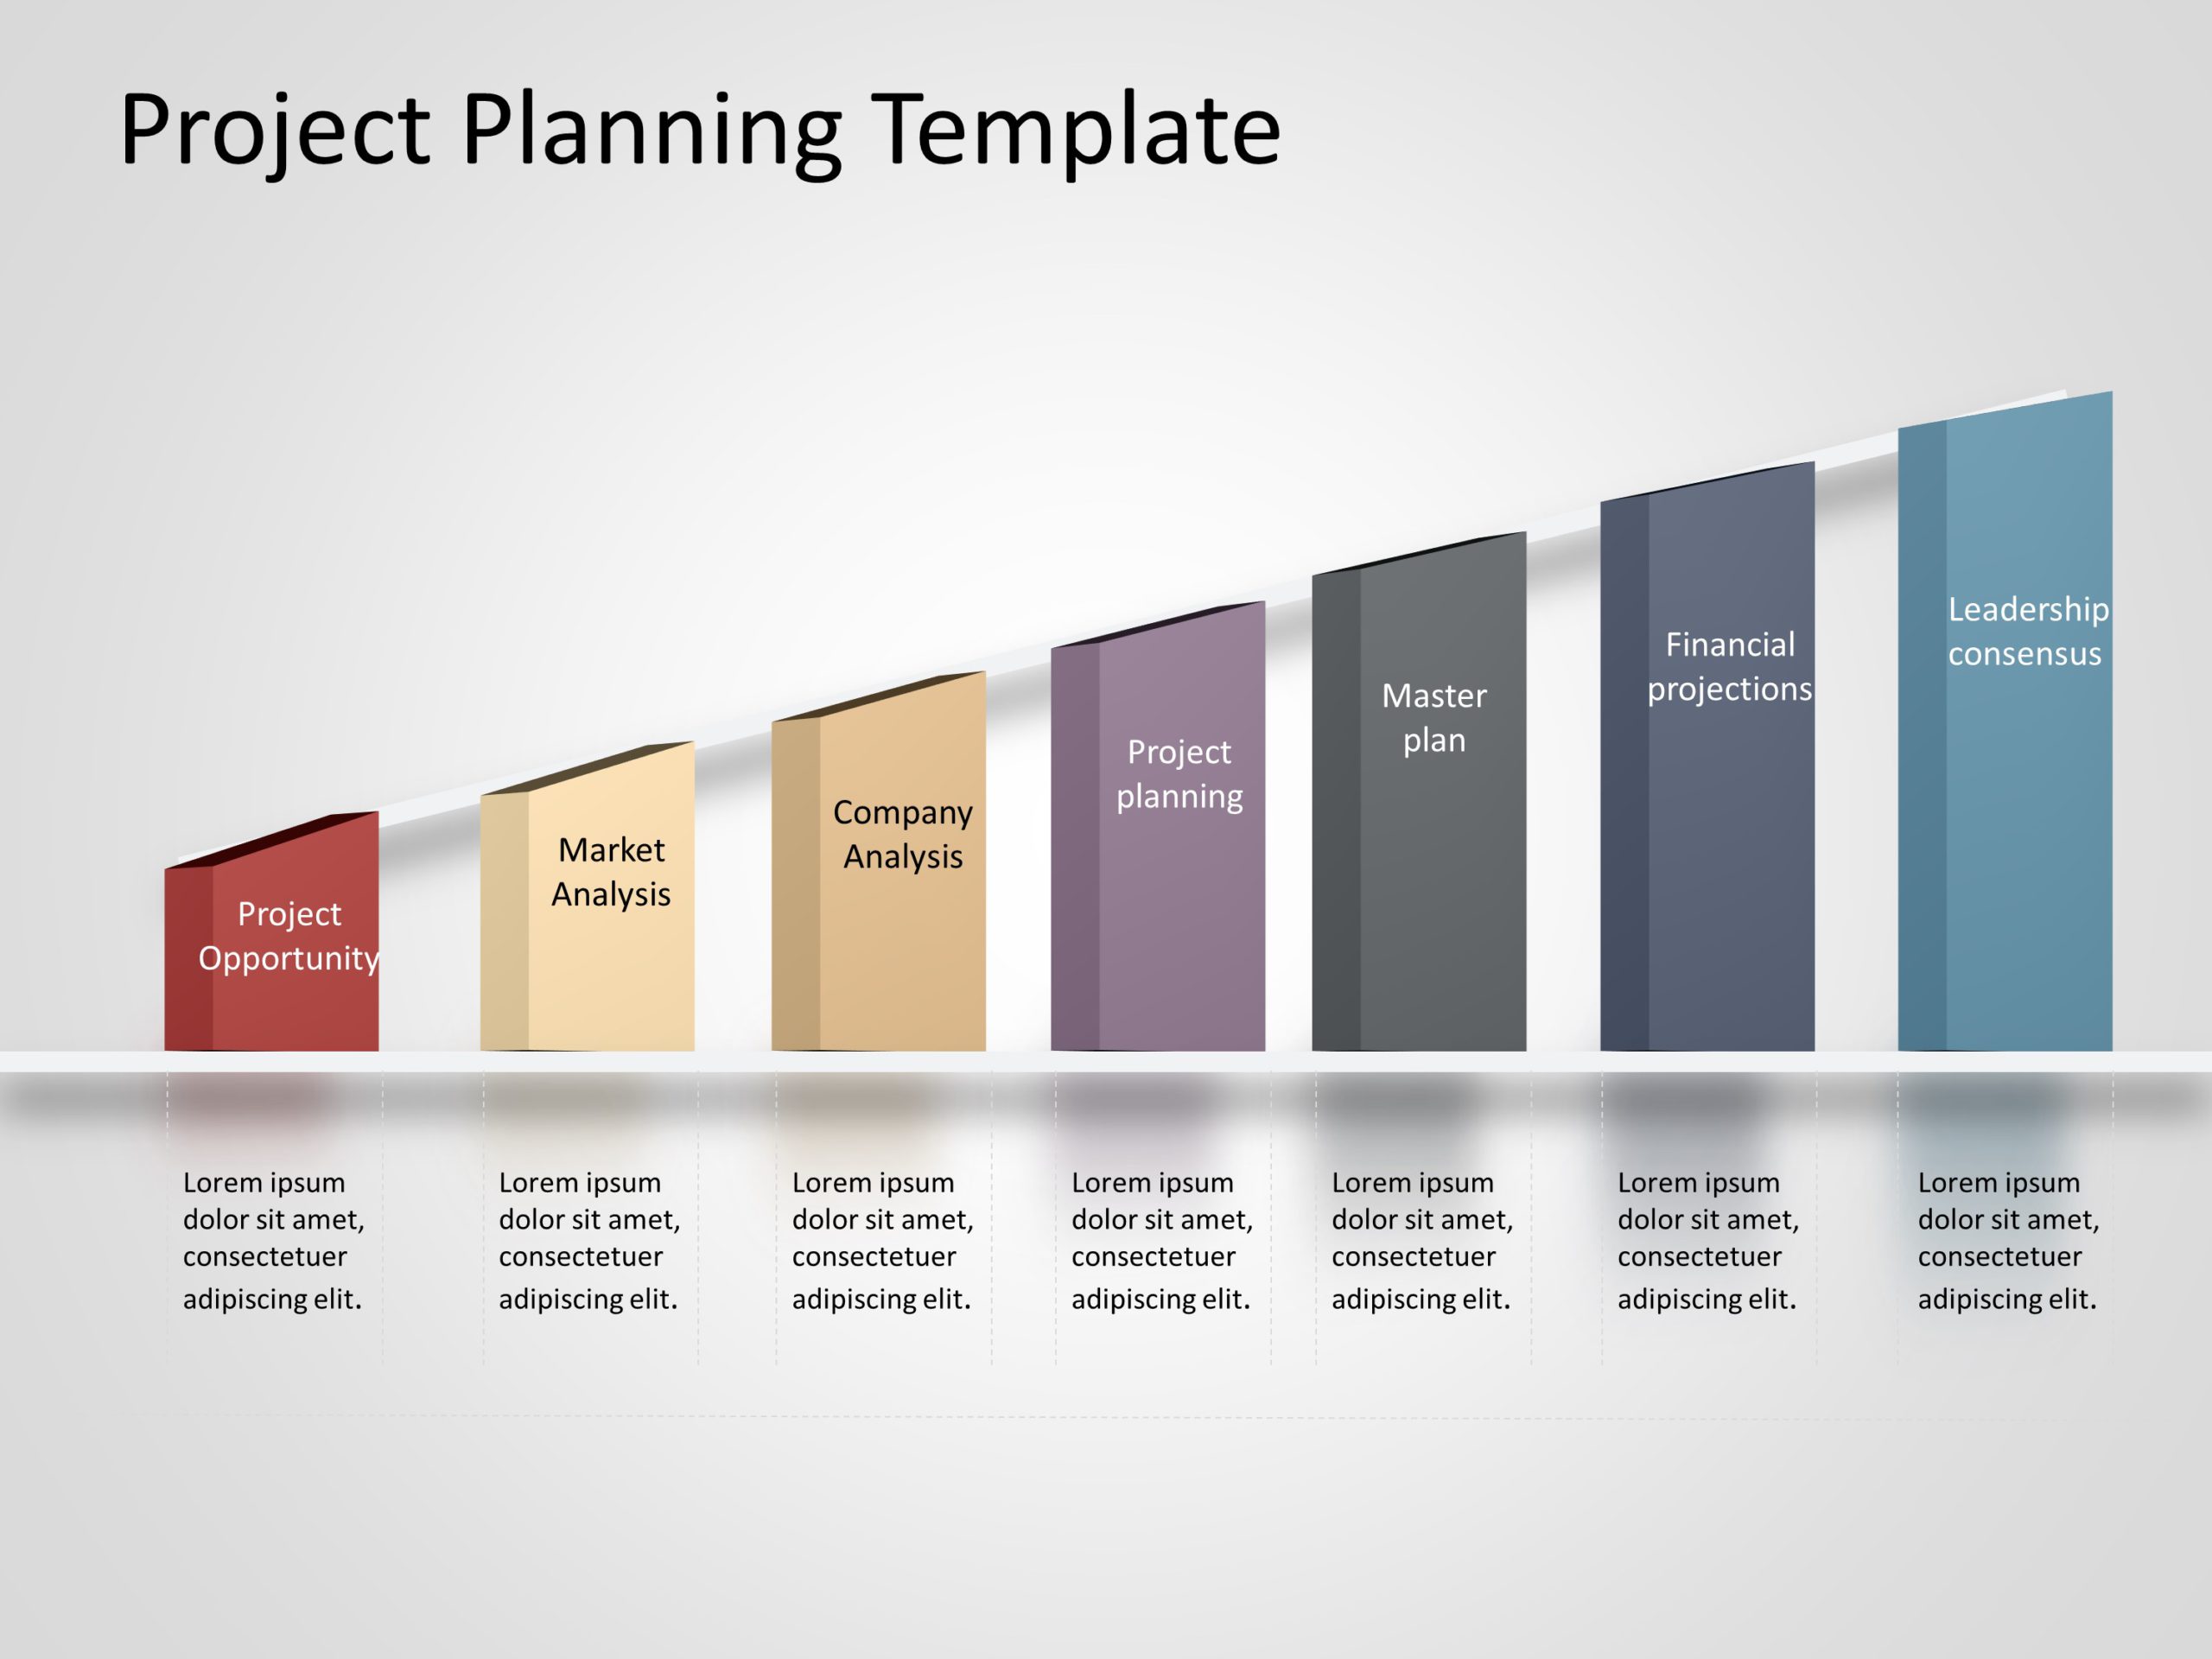 Project Planning 1 Powerpoint Template Slideuplift vrogue co